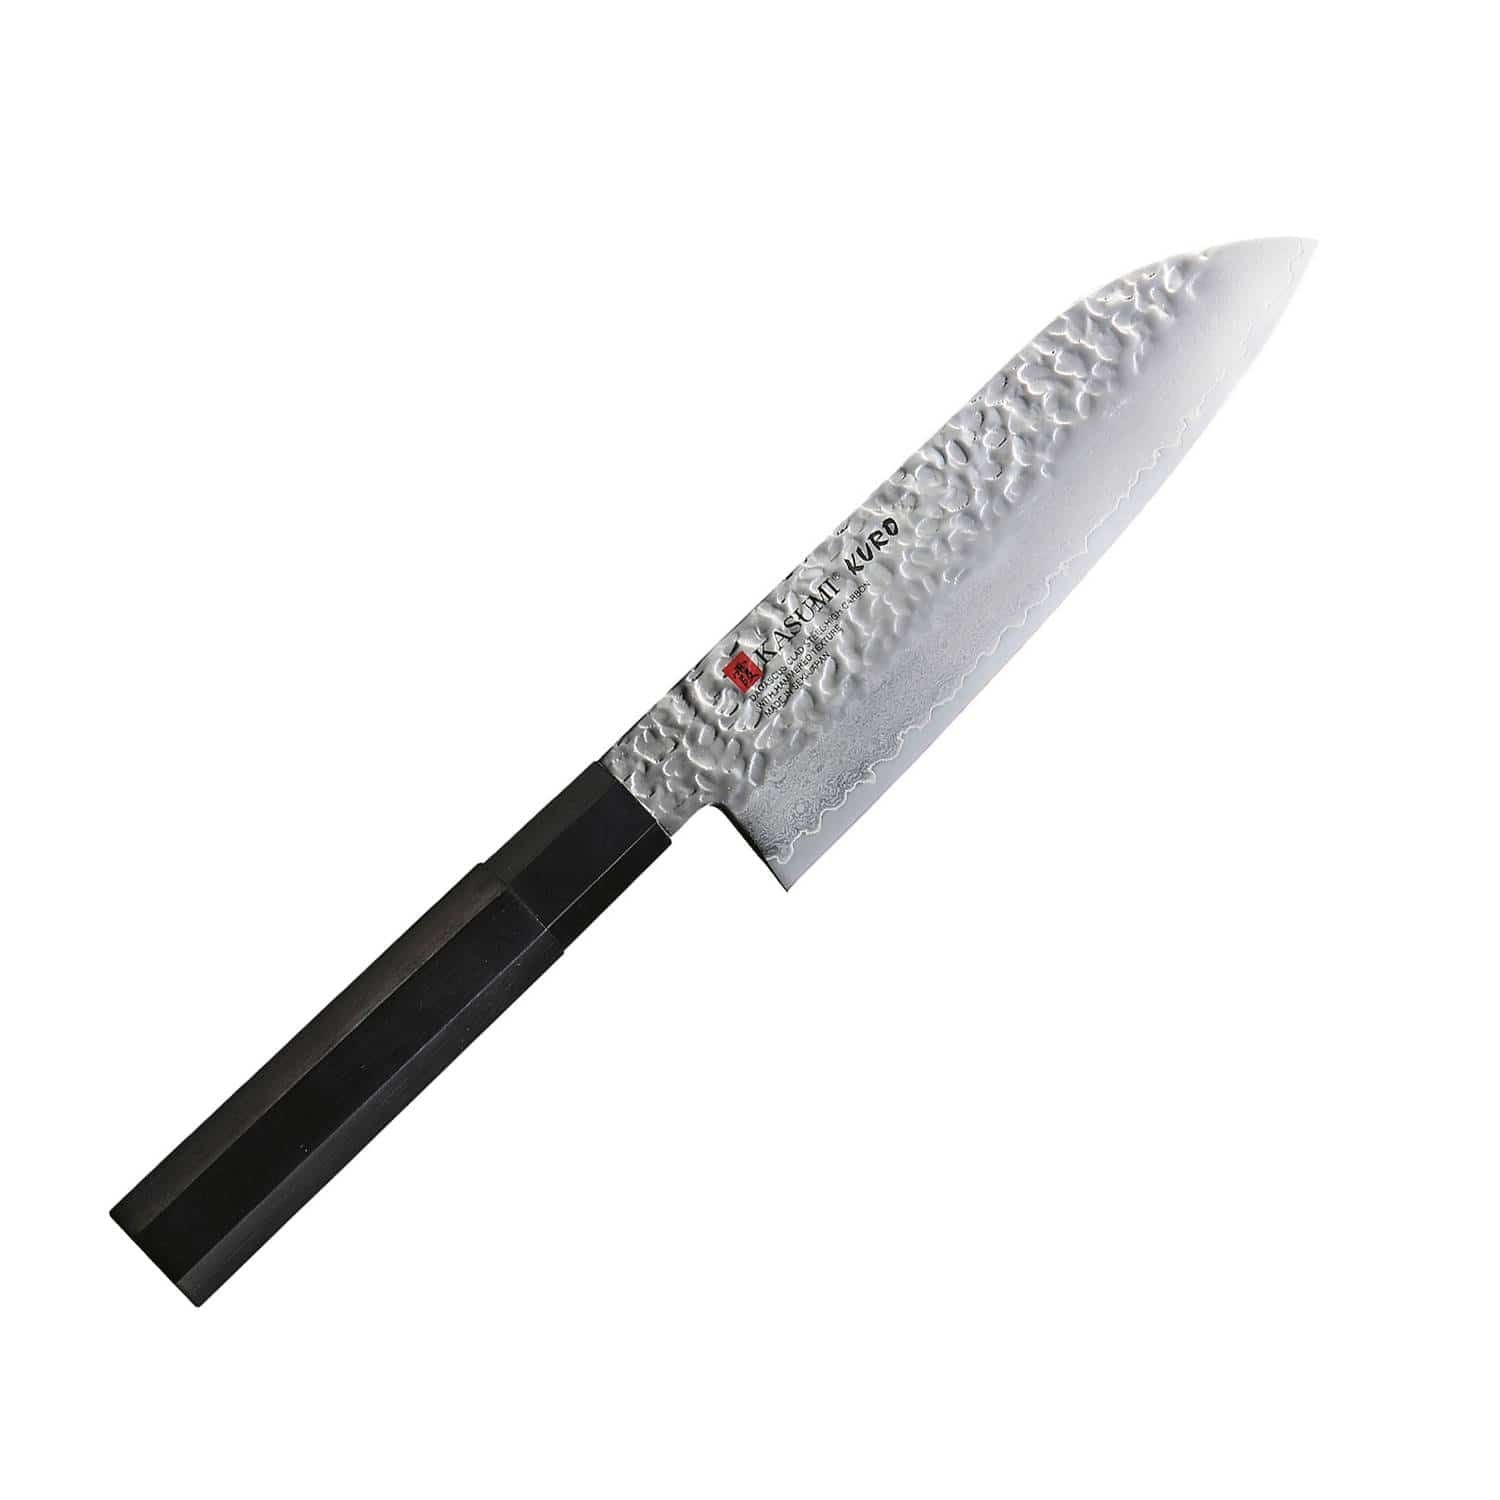 Kasumi coltello snatoku damascato 32 strati 16,5 cm K-35017